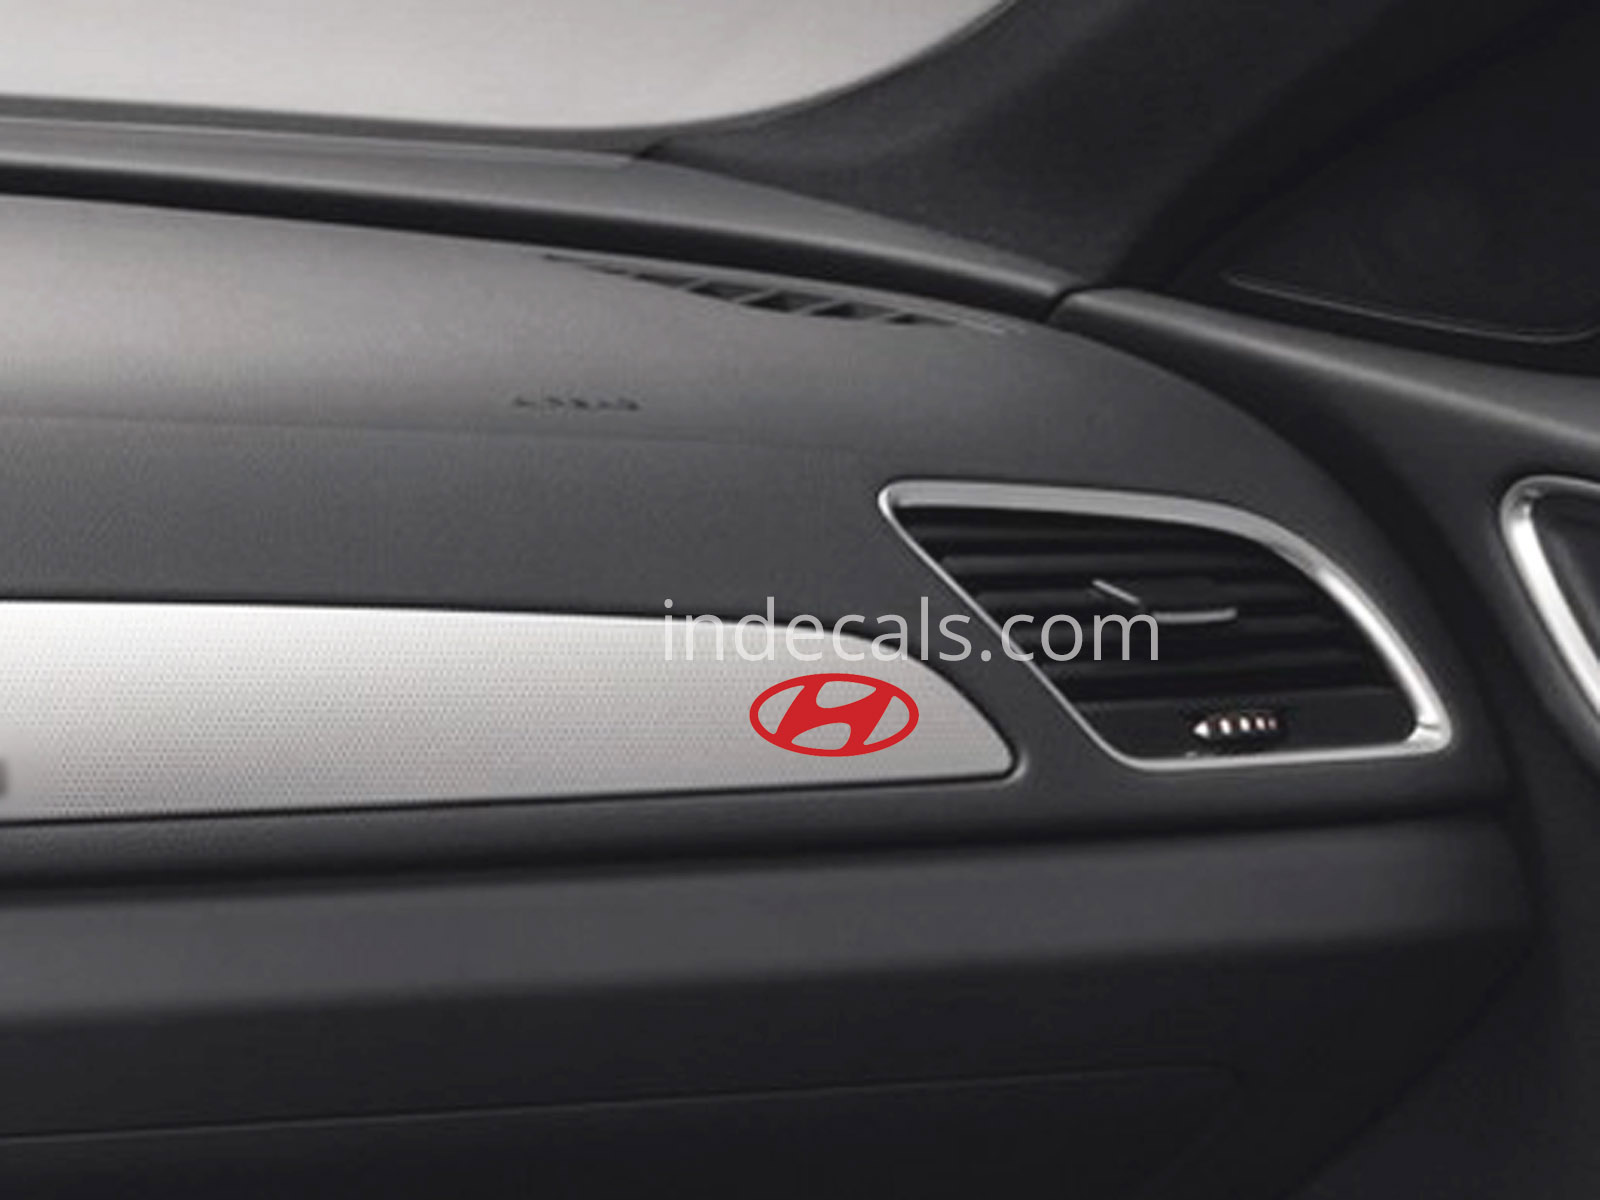 3 x Hyundai Stickers for Dash Trim - Red